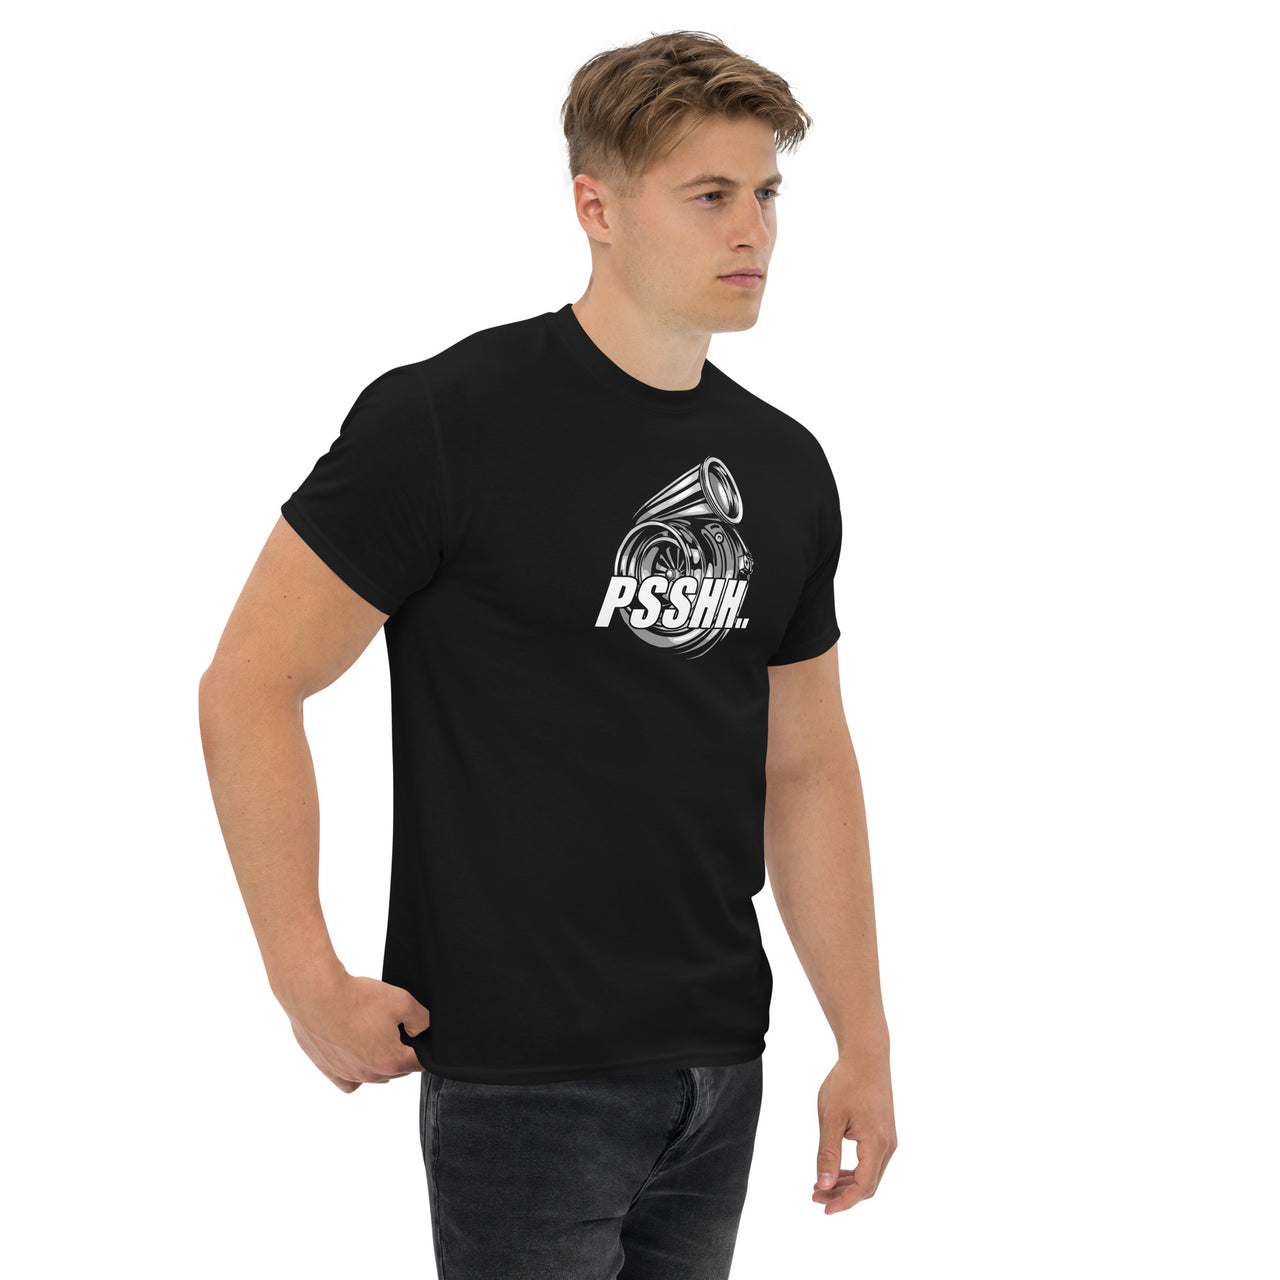 Funny Car Guy Turbo T-Shirt - PSSHH modeled in black